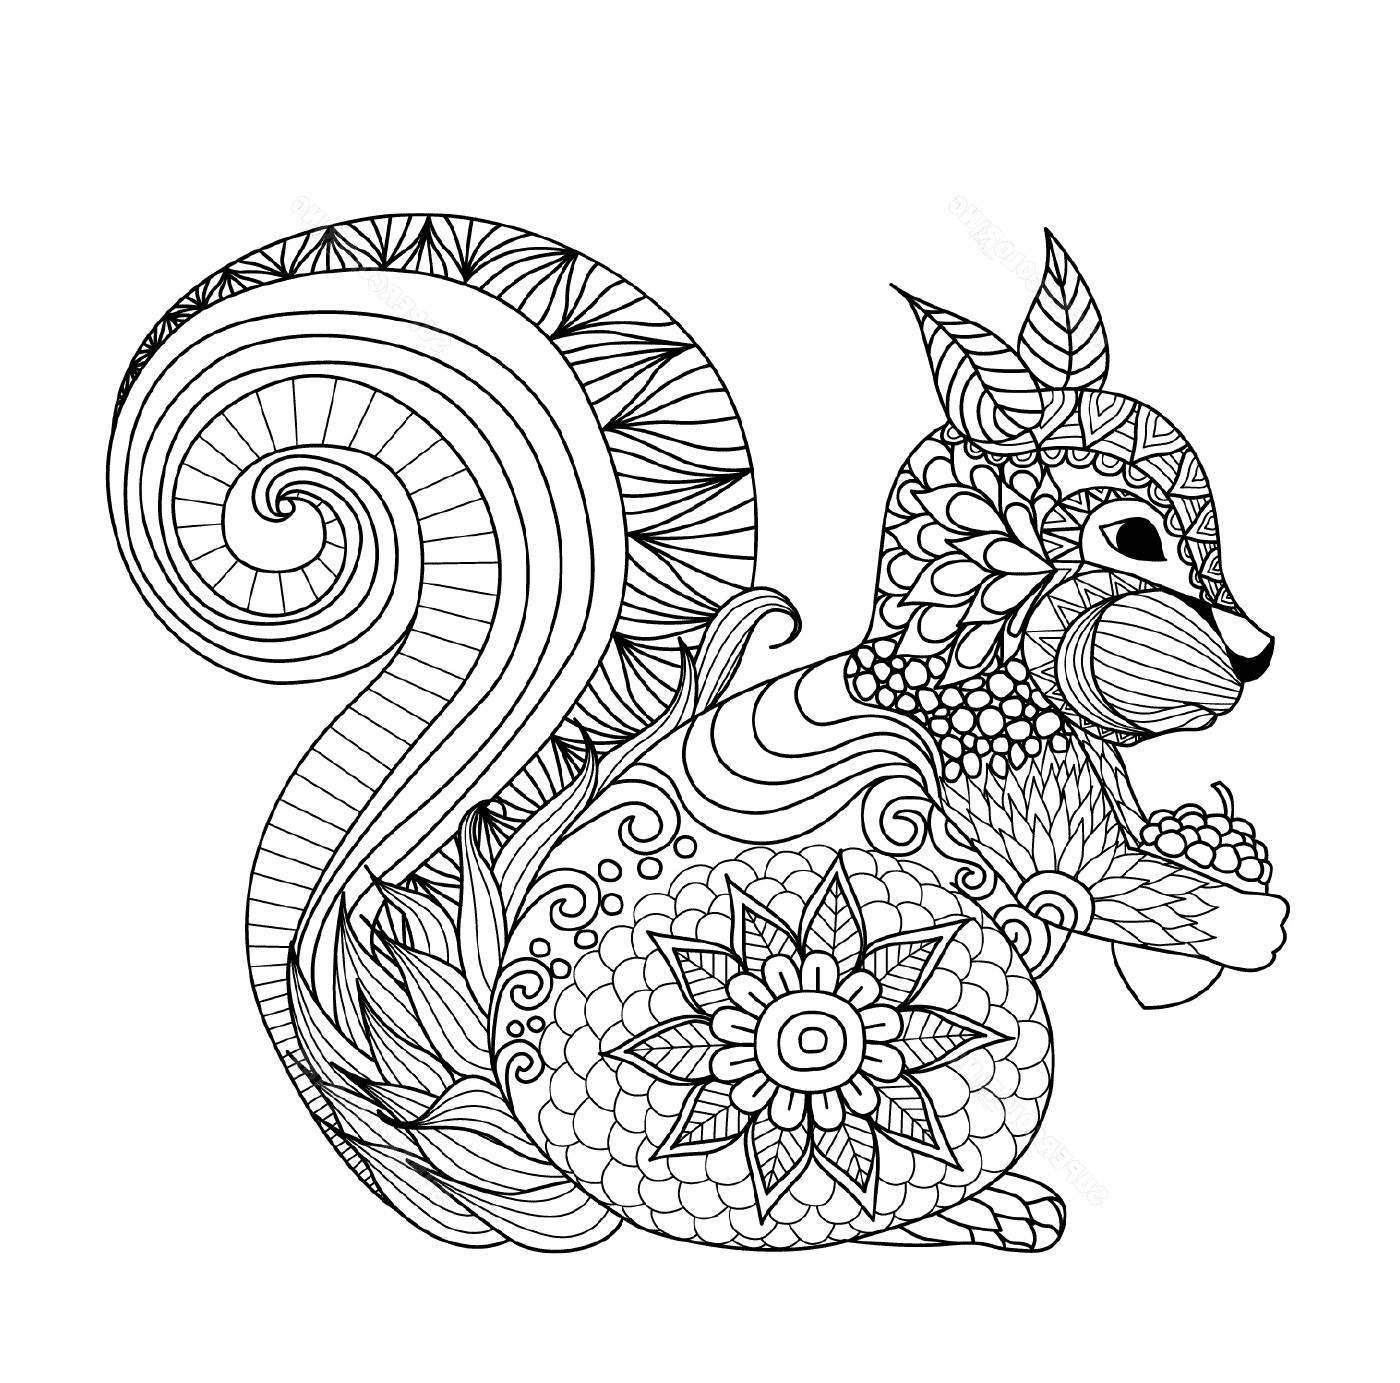  Elegant squirrel in zentangle style 